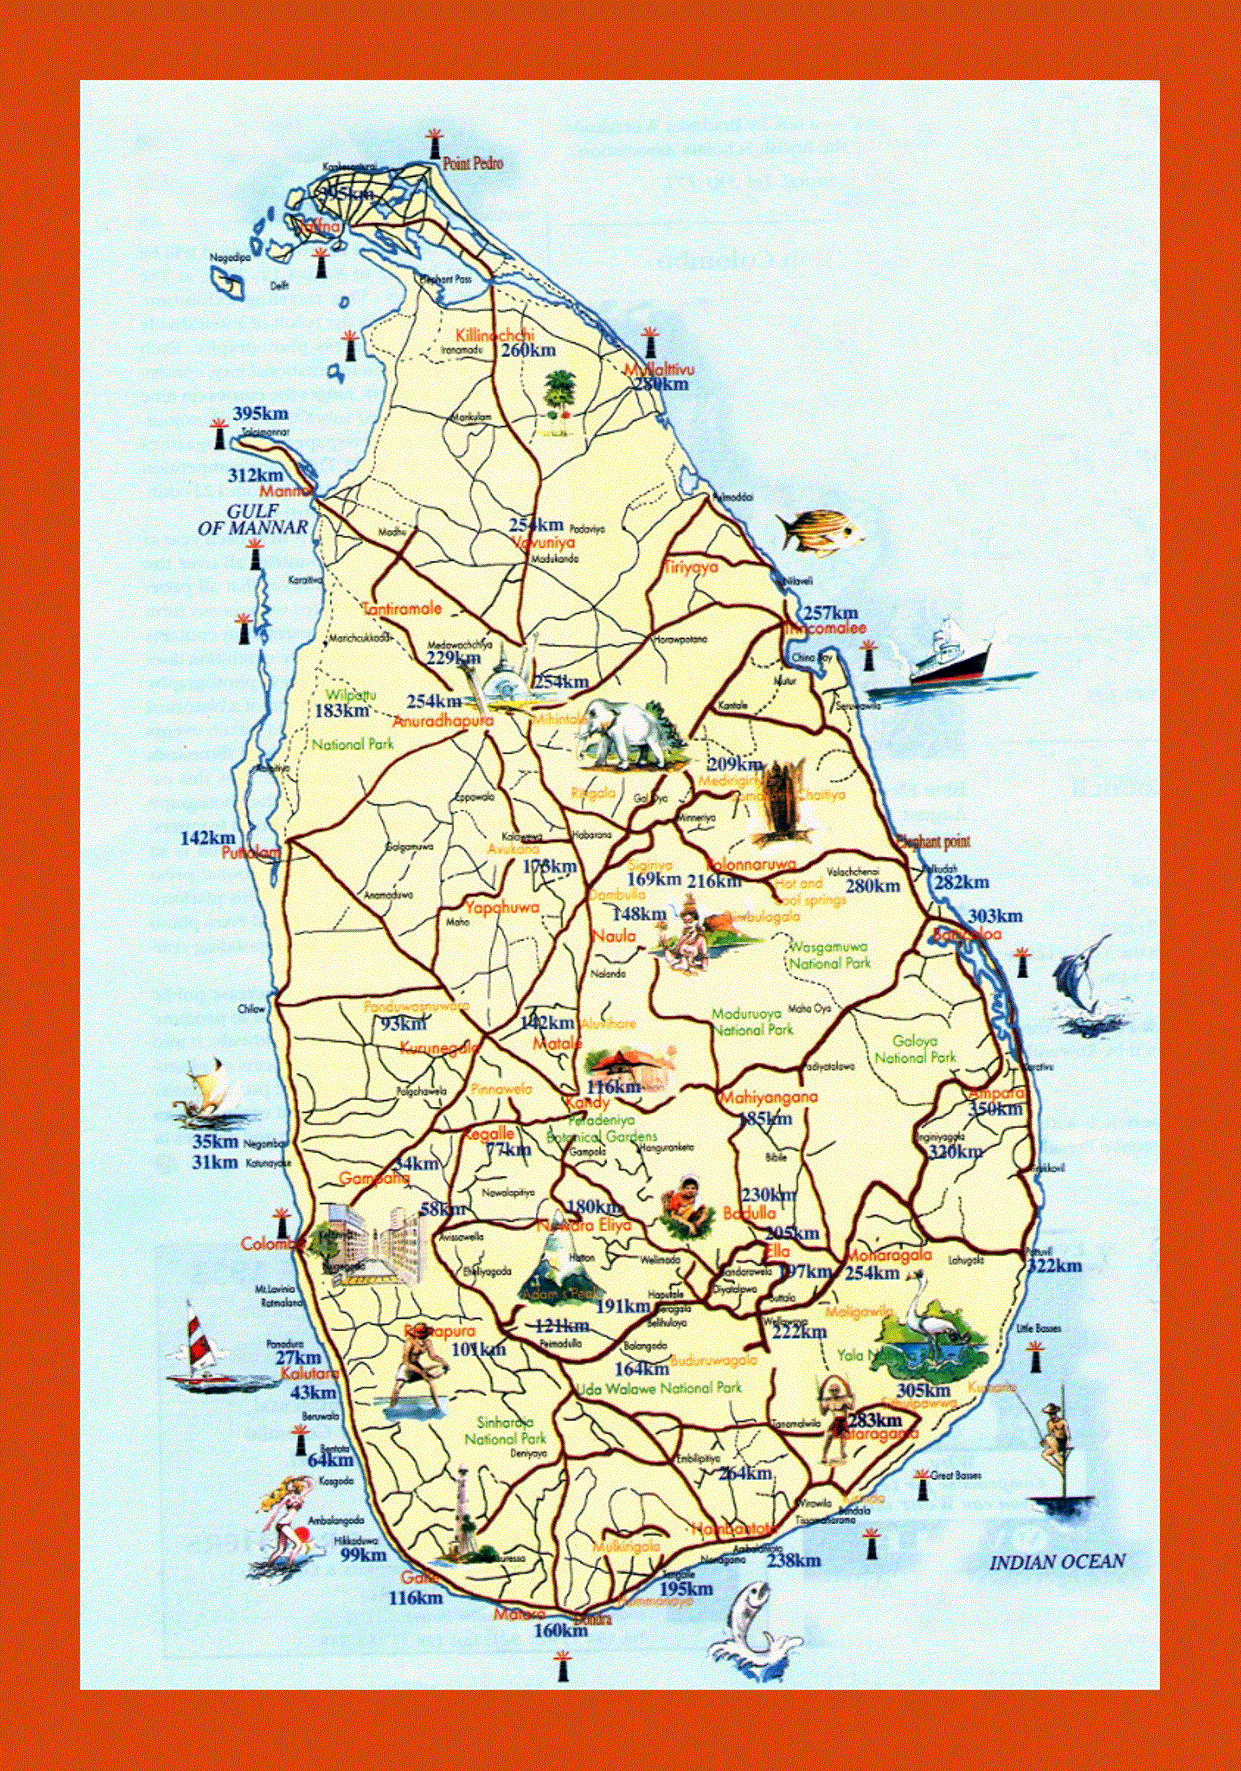 Tourist map of Sri Lanka